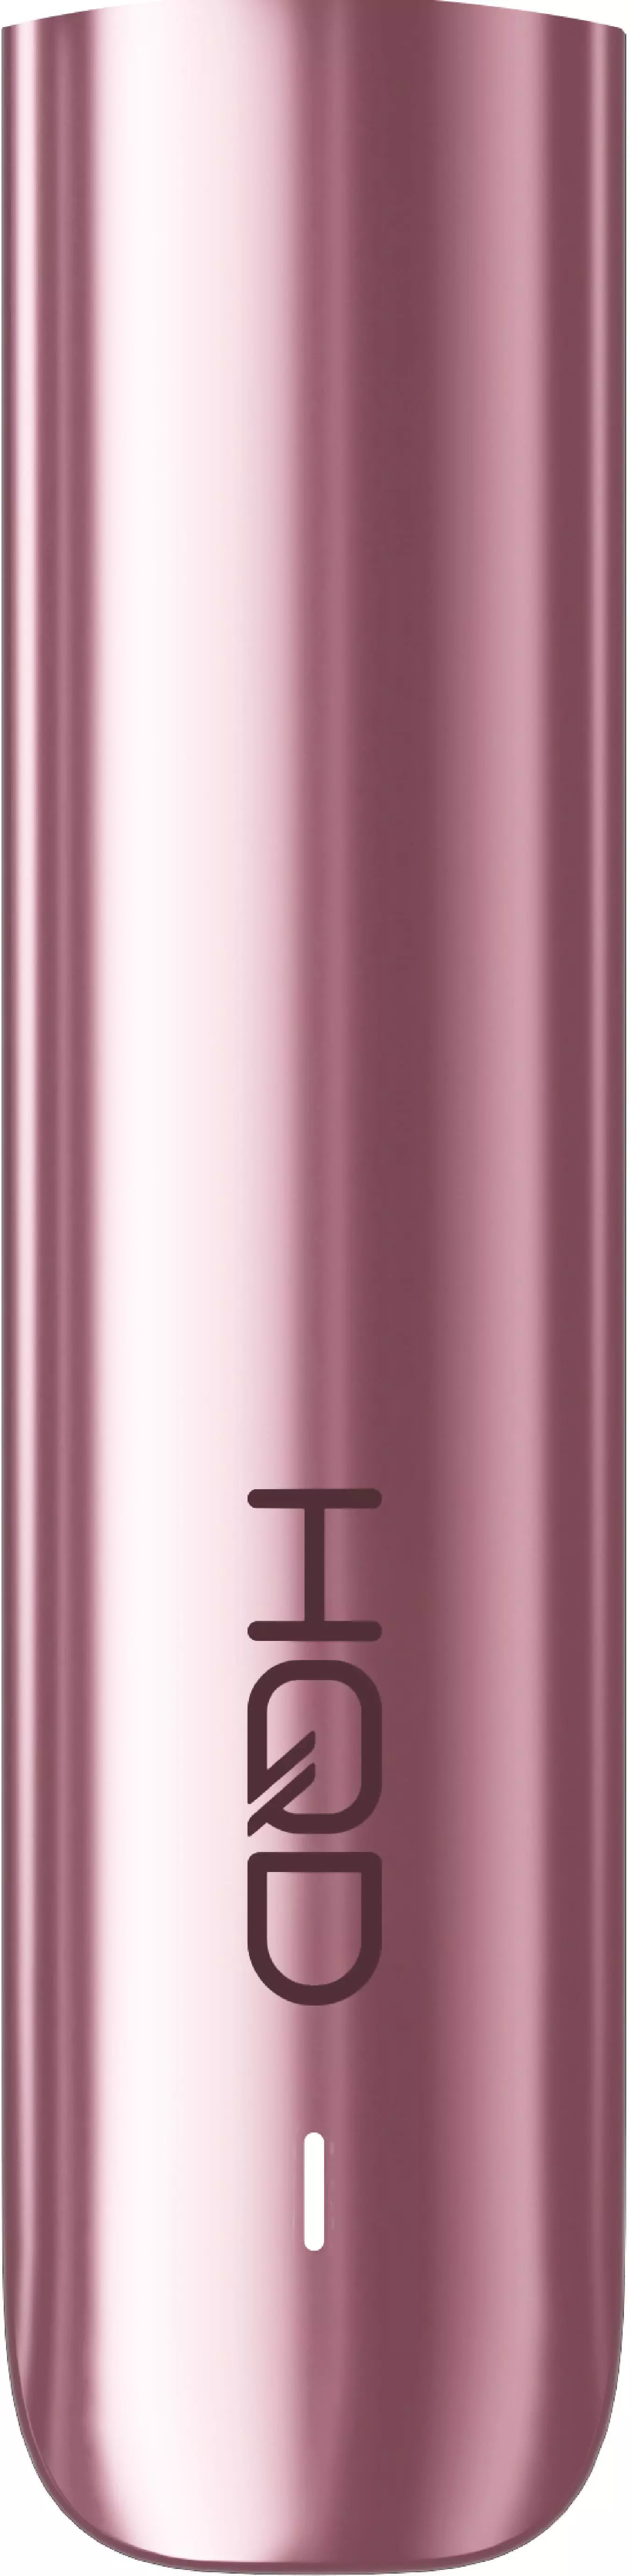 HQD Cirak Device Pink